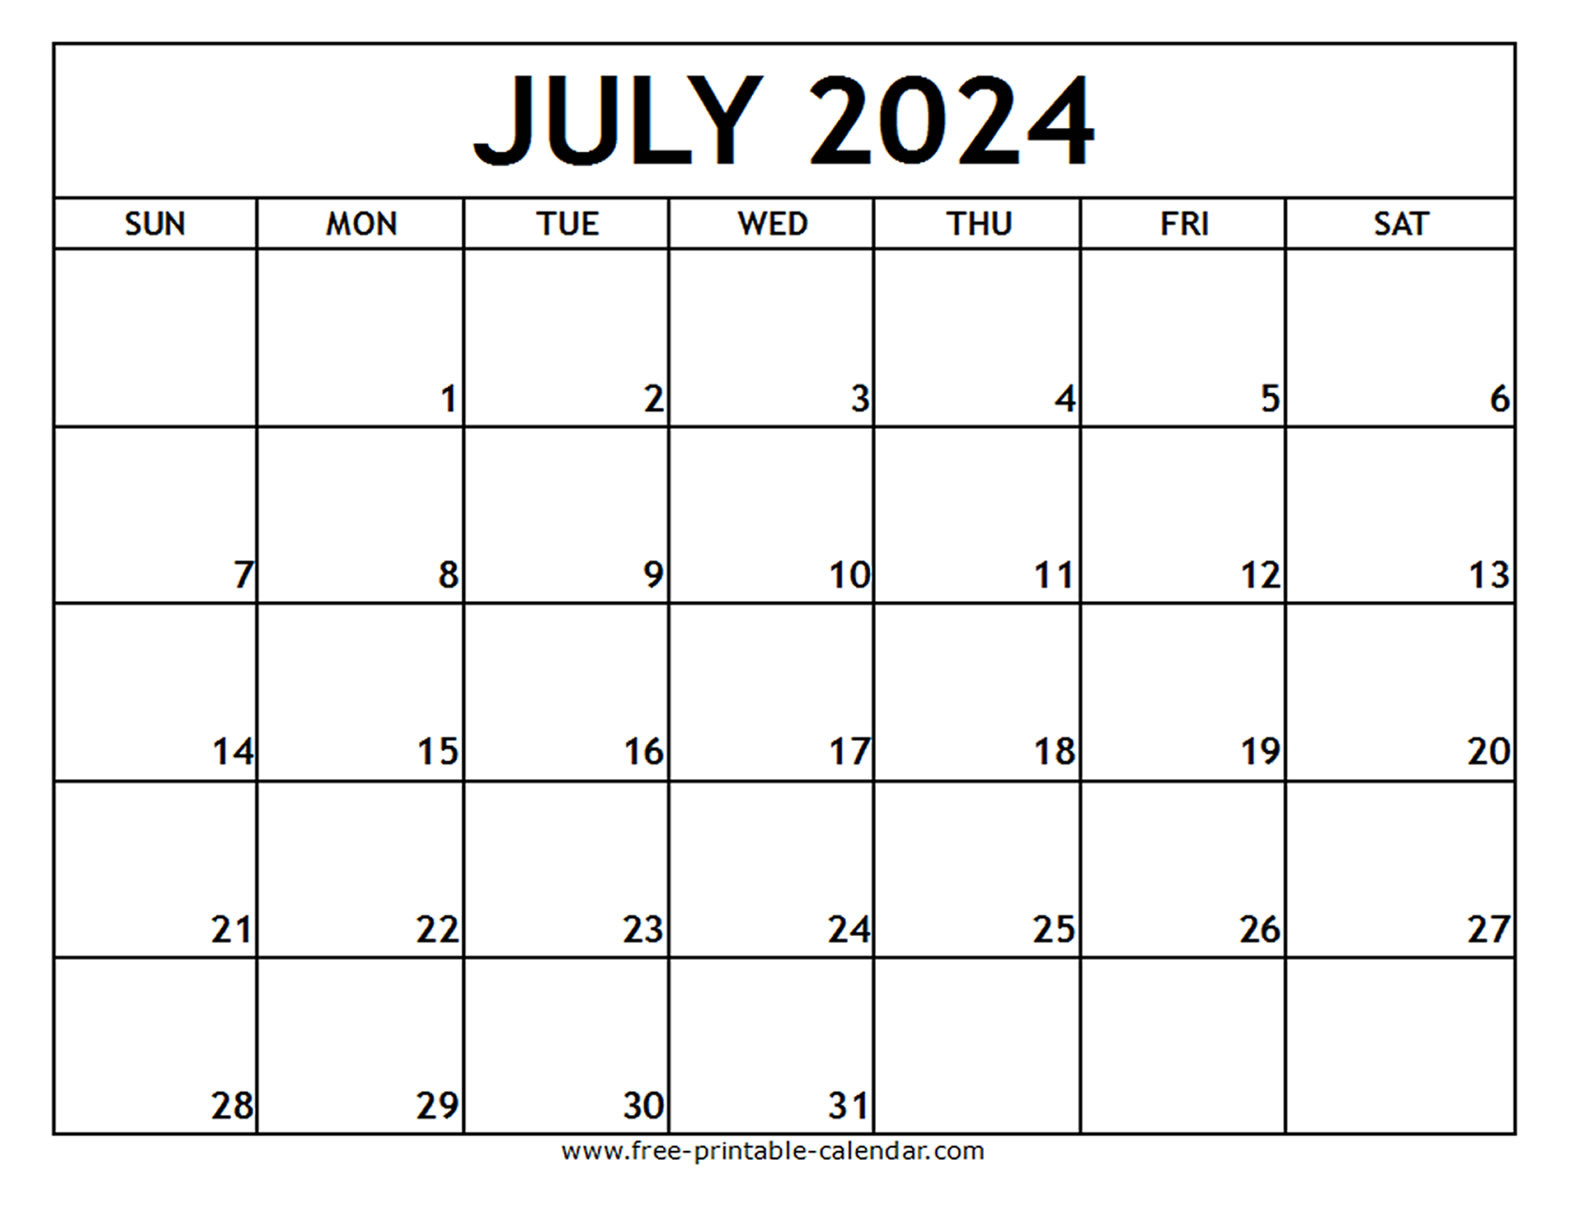 July 2024 Printable Calendar - Free-Printable-Calendar throughout July Free Printable Calendar 2024